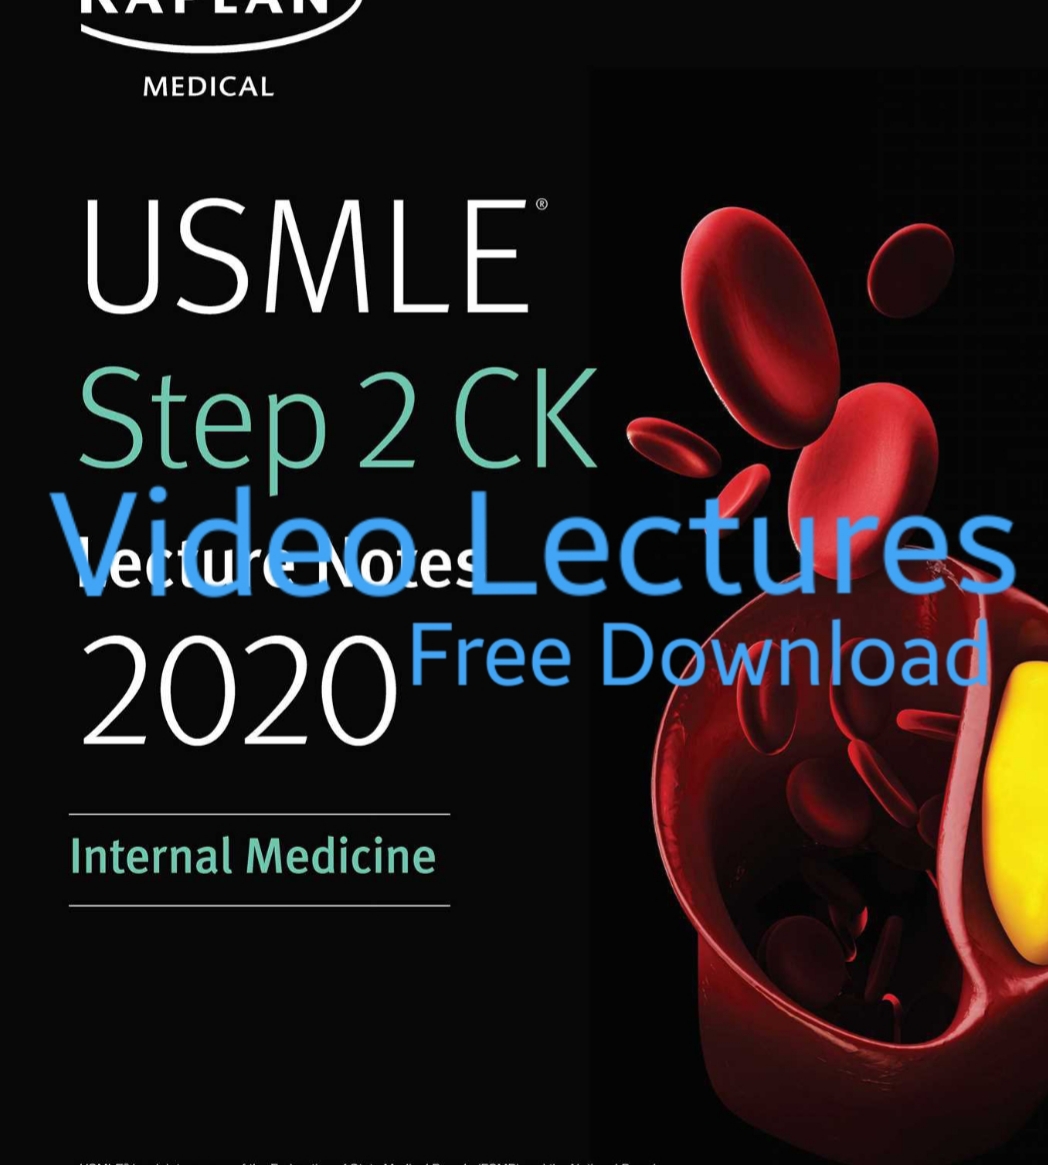 USMLE Step 2CK Internal Medicine Video Lectures free download